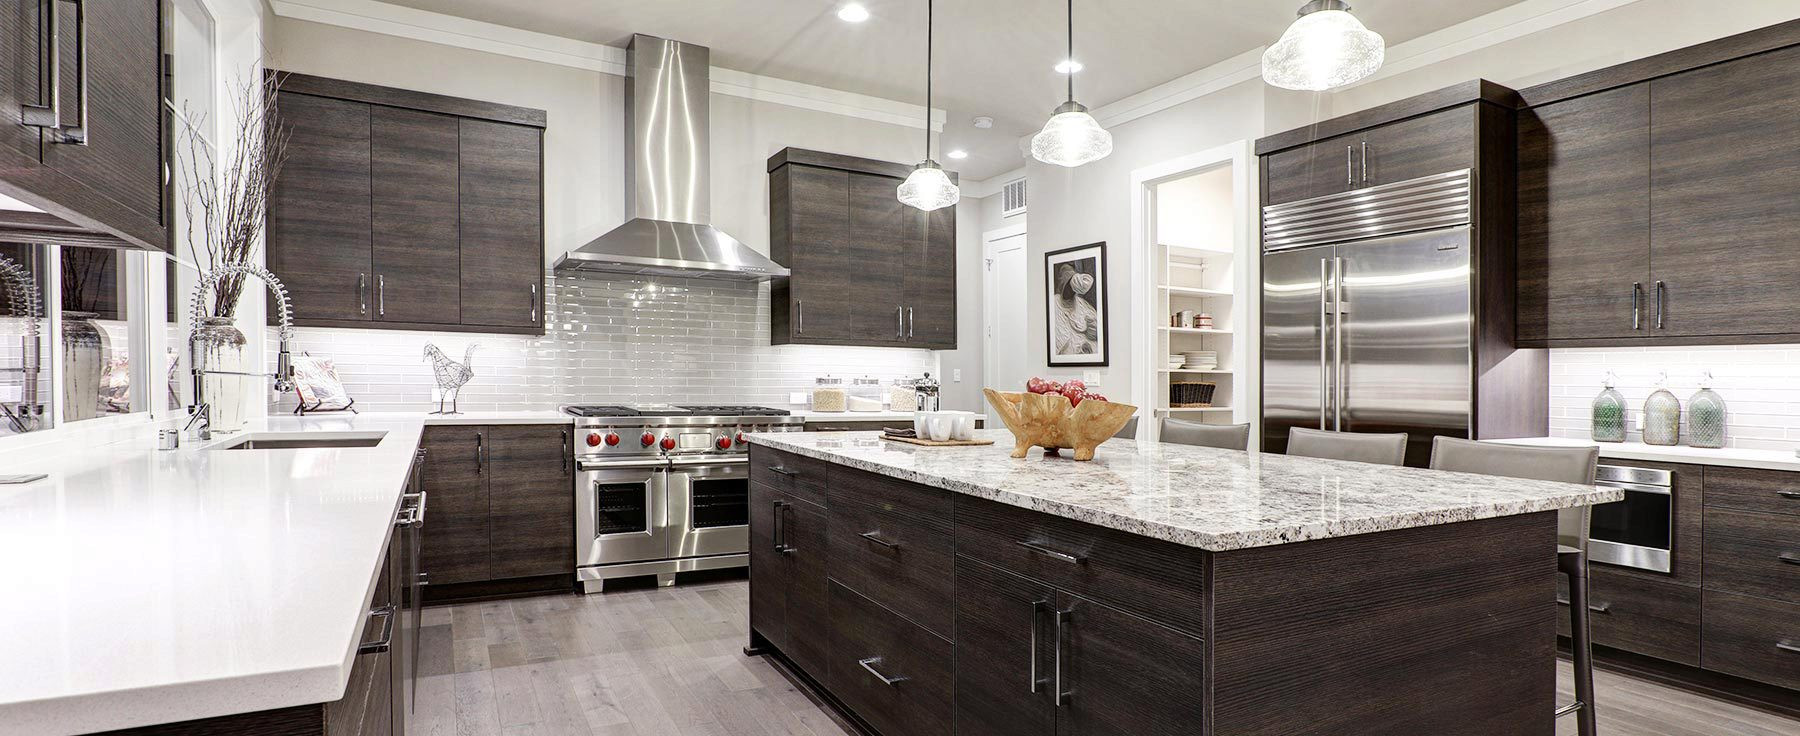 Estimate Kitchen Remodel
 Kitchen Remodels Under 5000 – Wow Blog